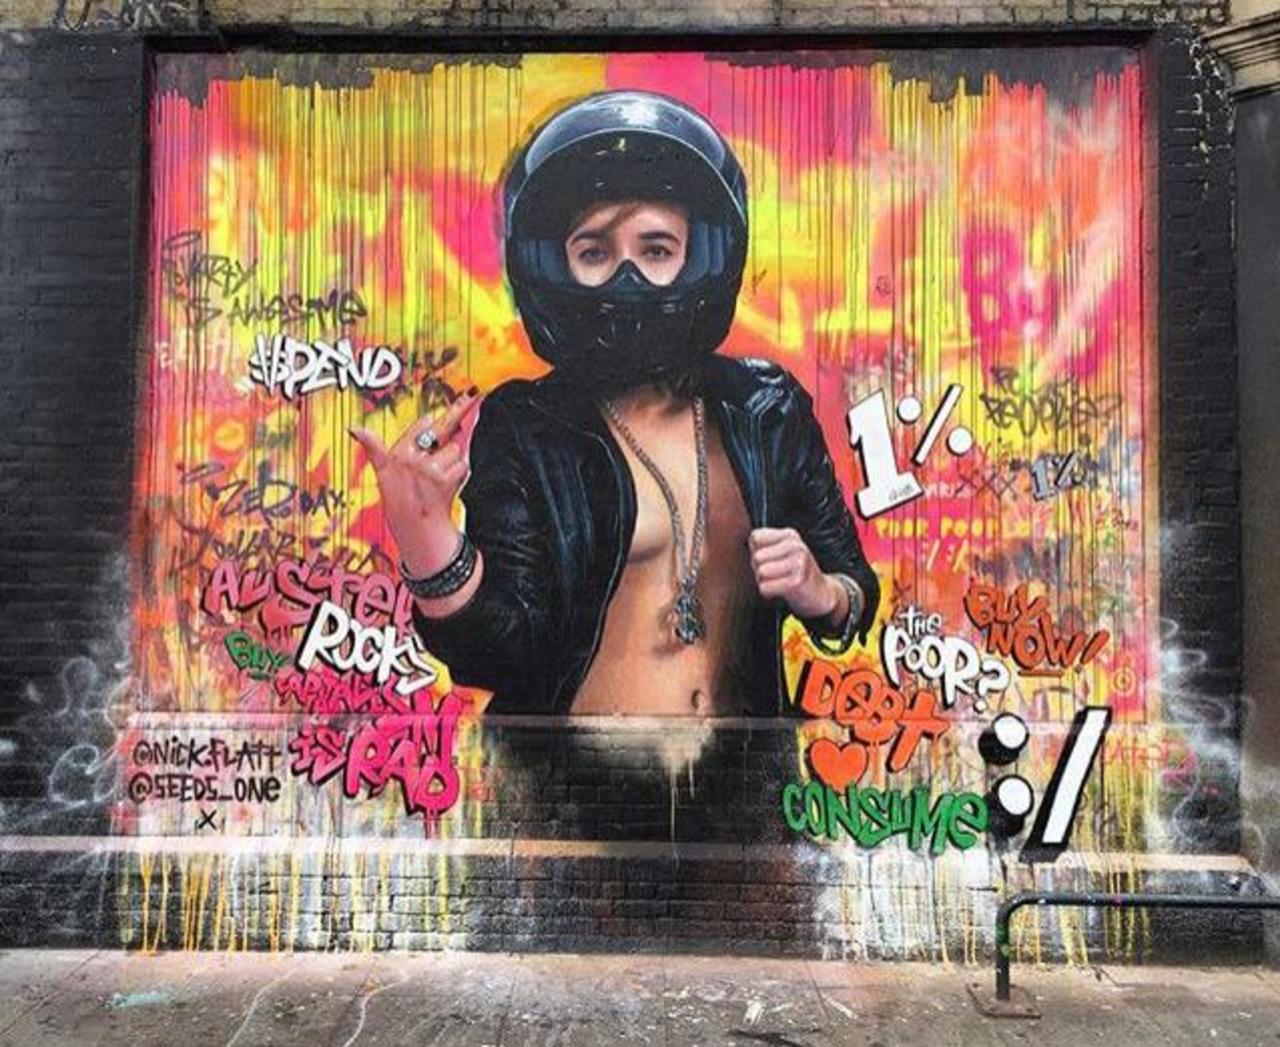 RT @mzajaeh: New Street Art collab by Nick Flatt &  Seeds One in London 

#art #graffiti #mural #streetart http://t.co/Wd7ebRgqy6